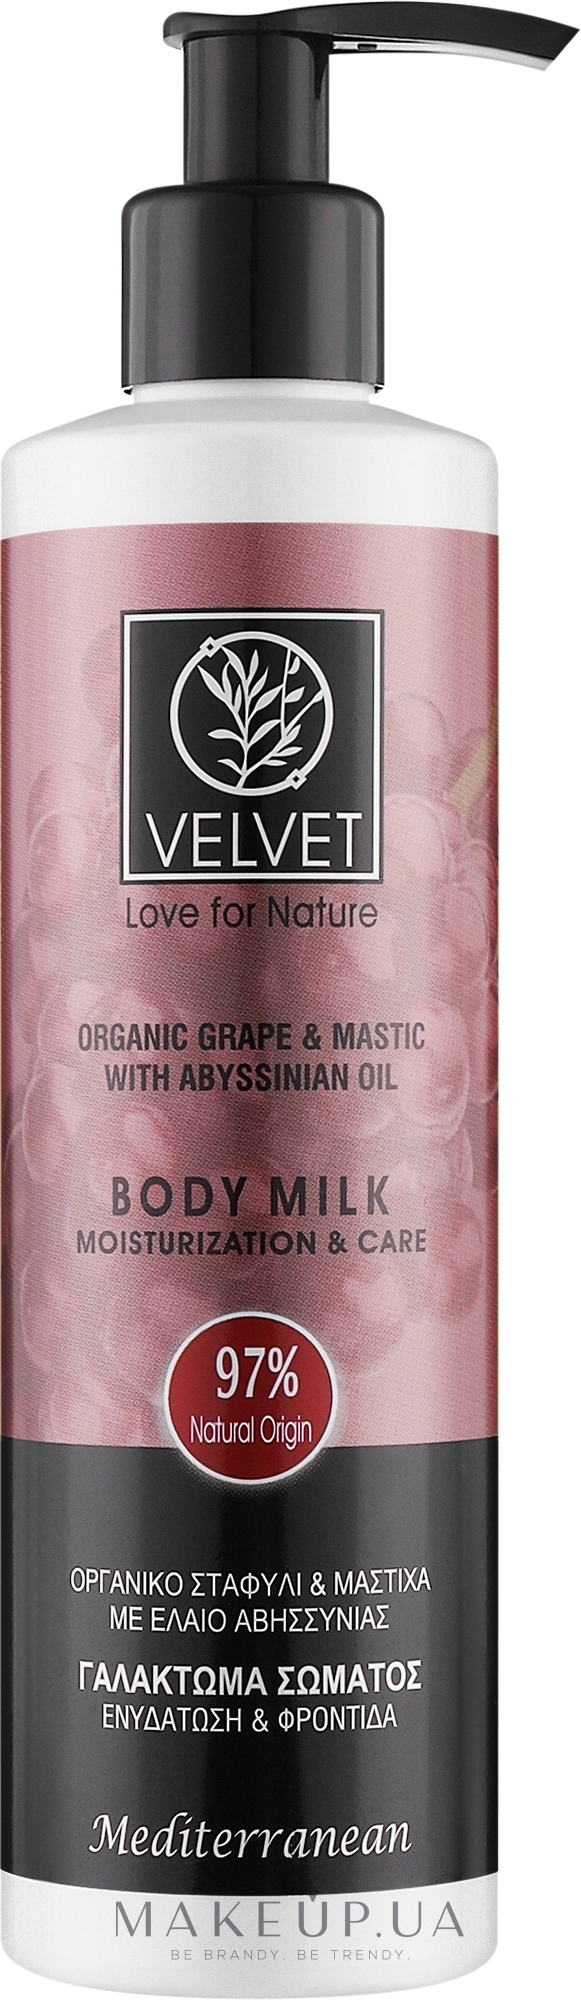 Молочко для увлажнения и ухода за телом - Velvet Love for Nature Organic Grape & Mastic Body Milk — фото 250ml